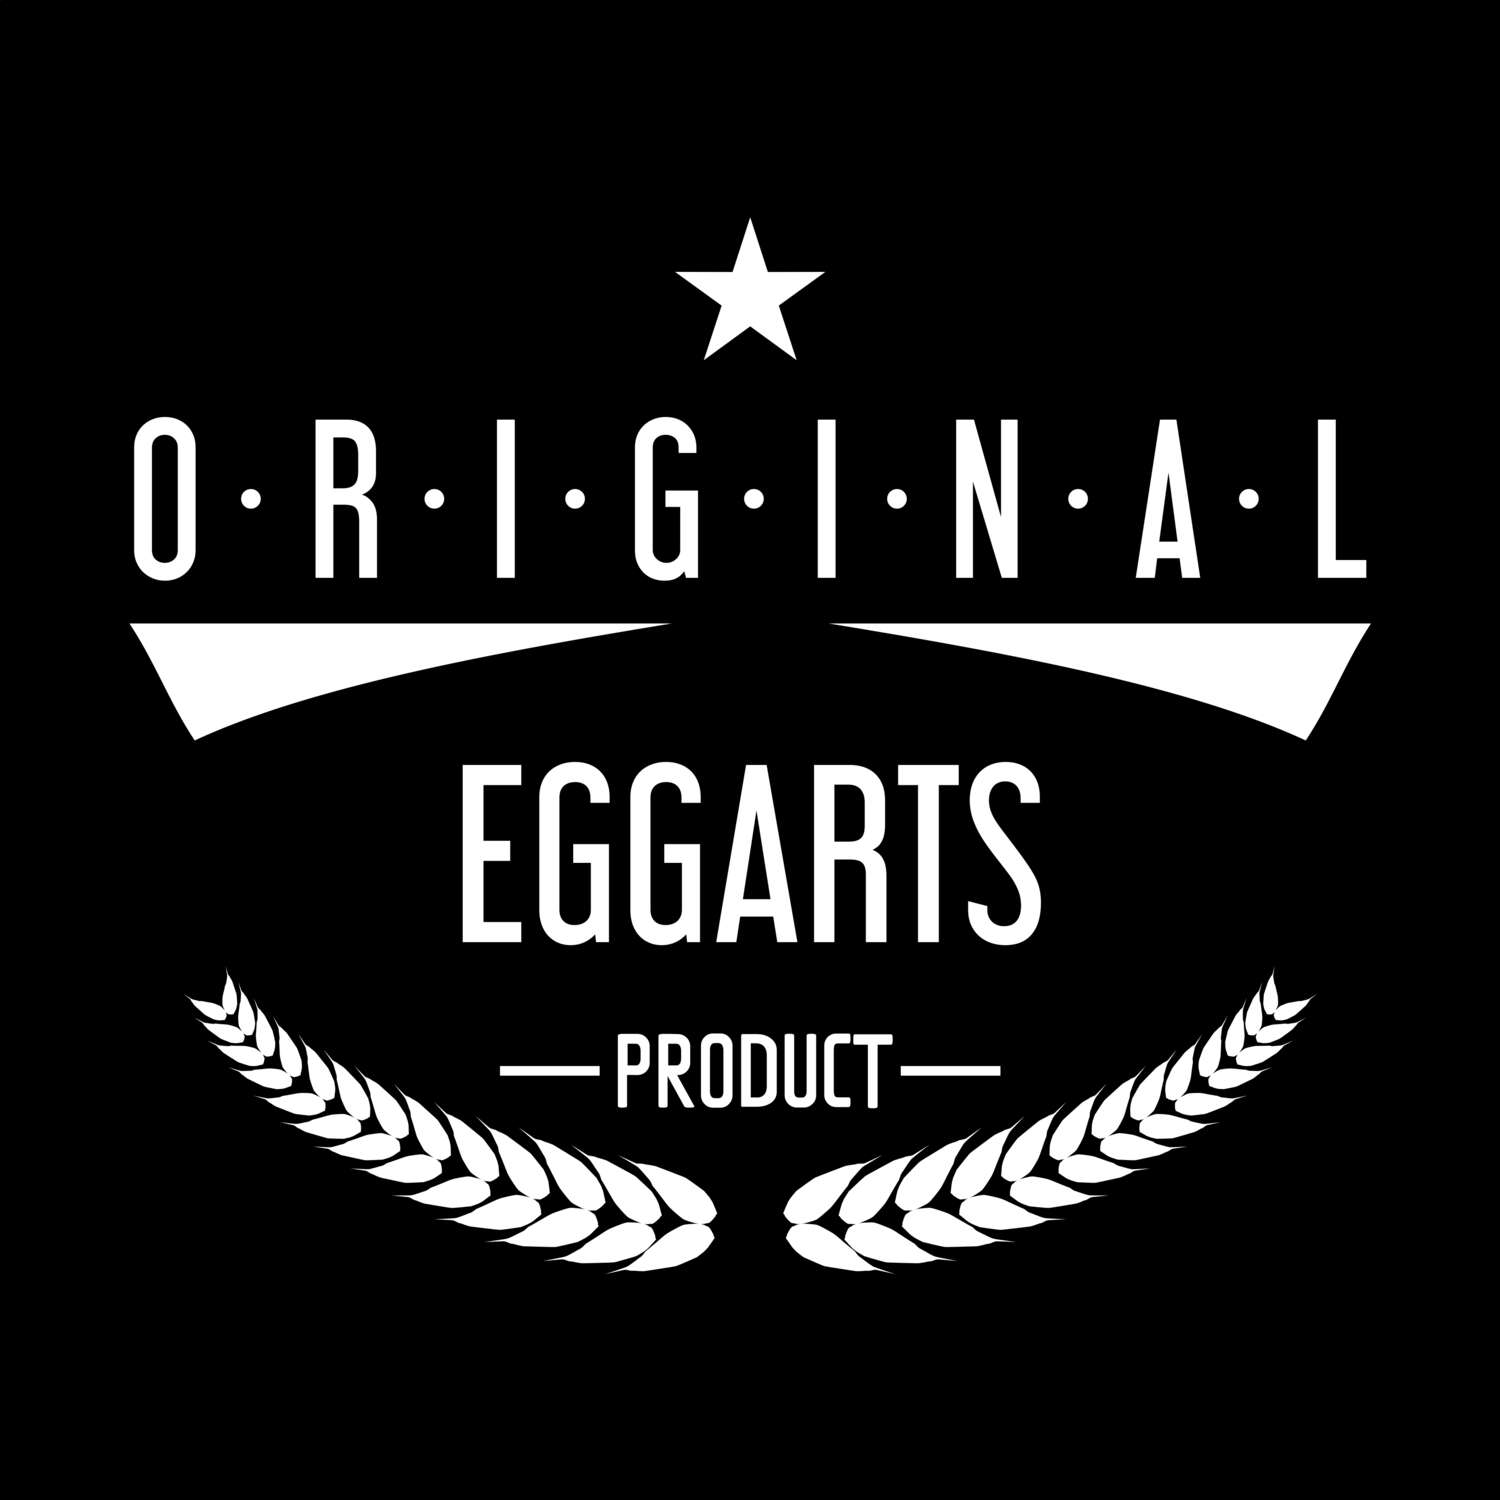 Eggarts T-Shirt »Original Product«